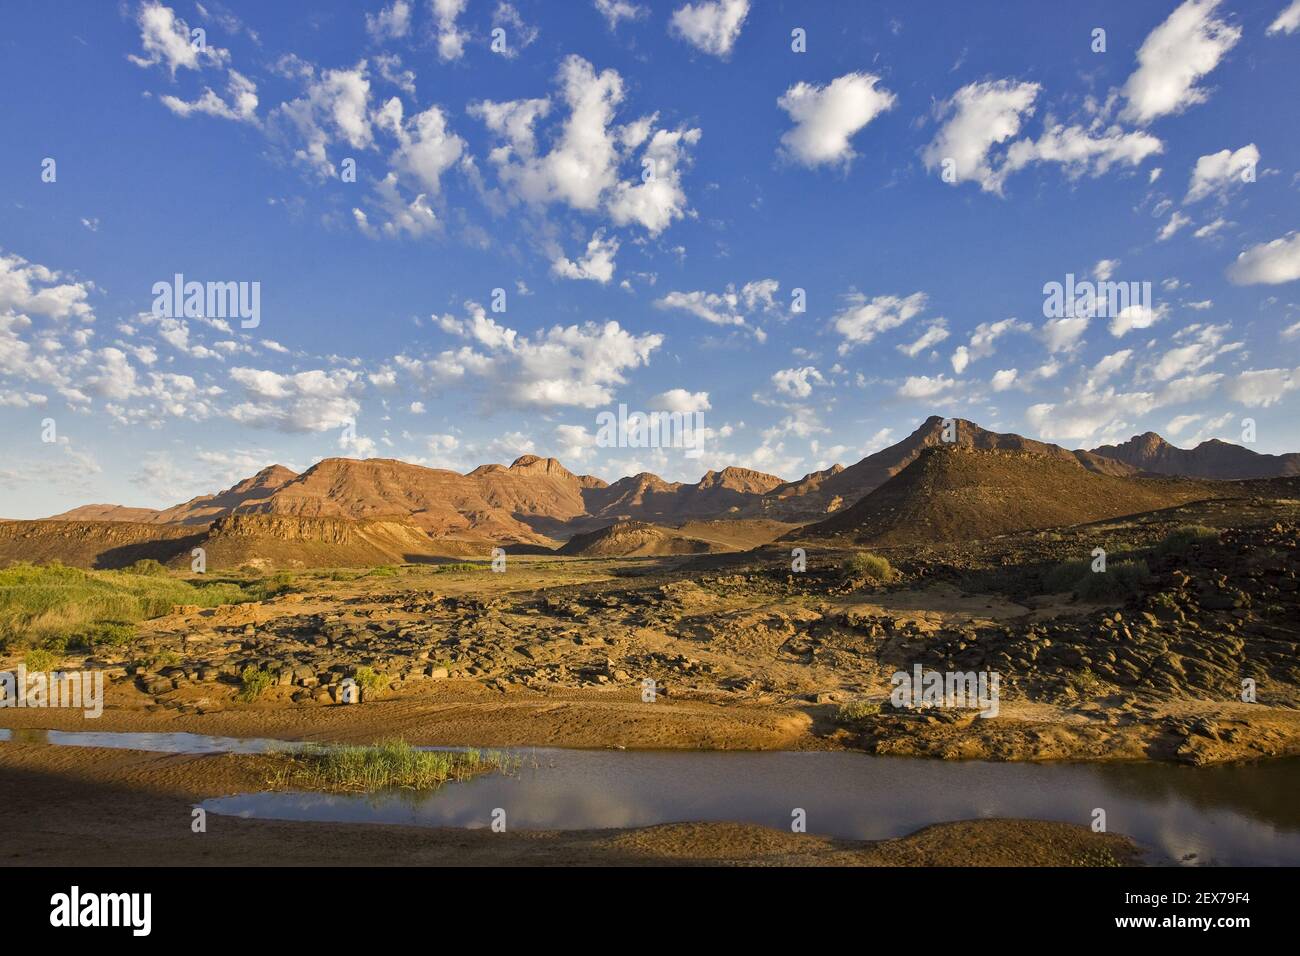 Landschaft bei Aba Huab in Damaraland, Namibia, Afrika, Landschaft bei Huab in Damarland, Afrika Stockfoto